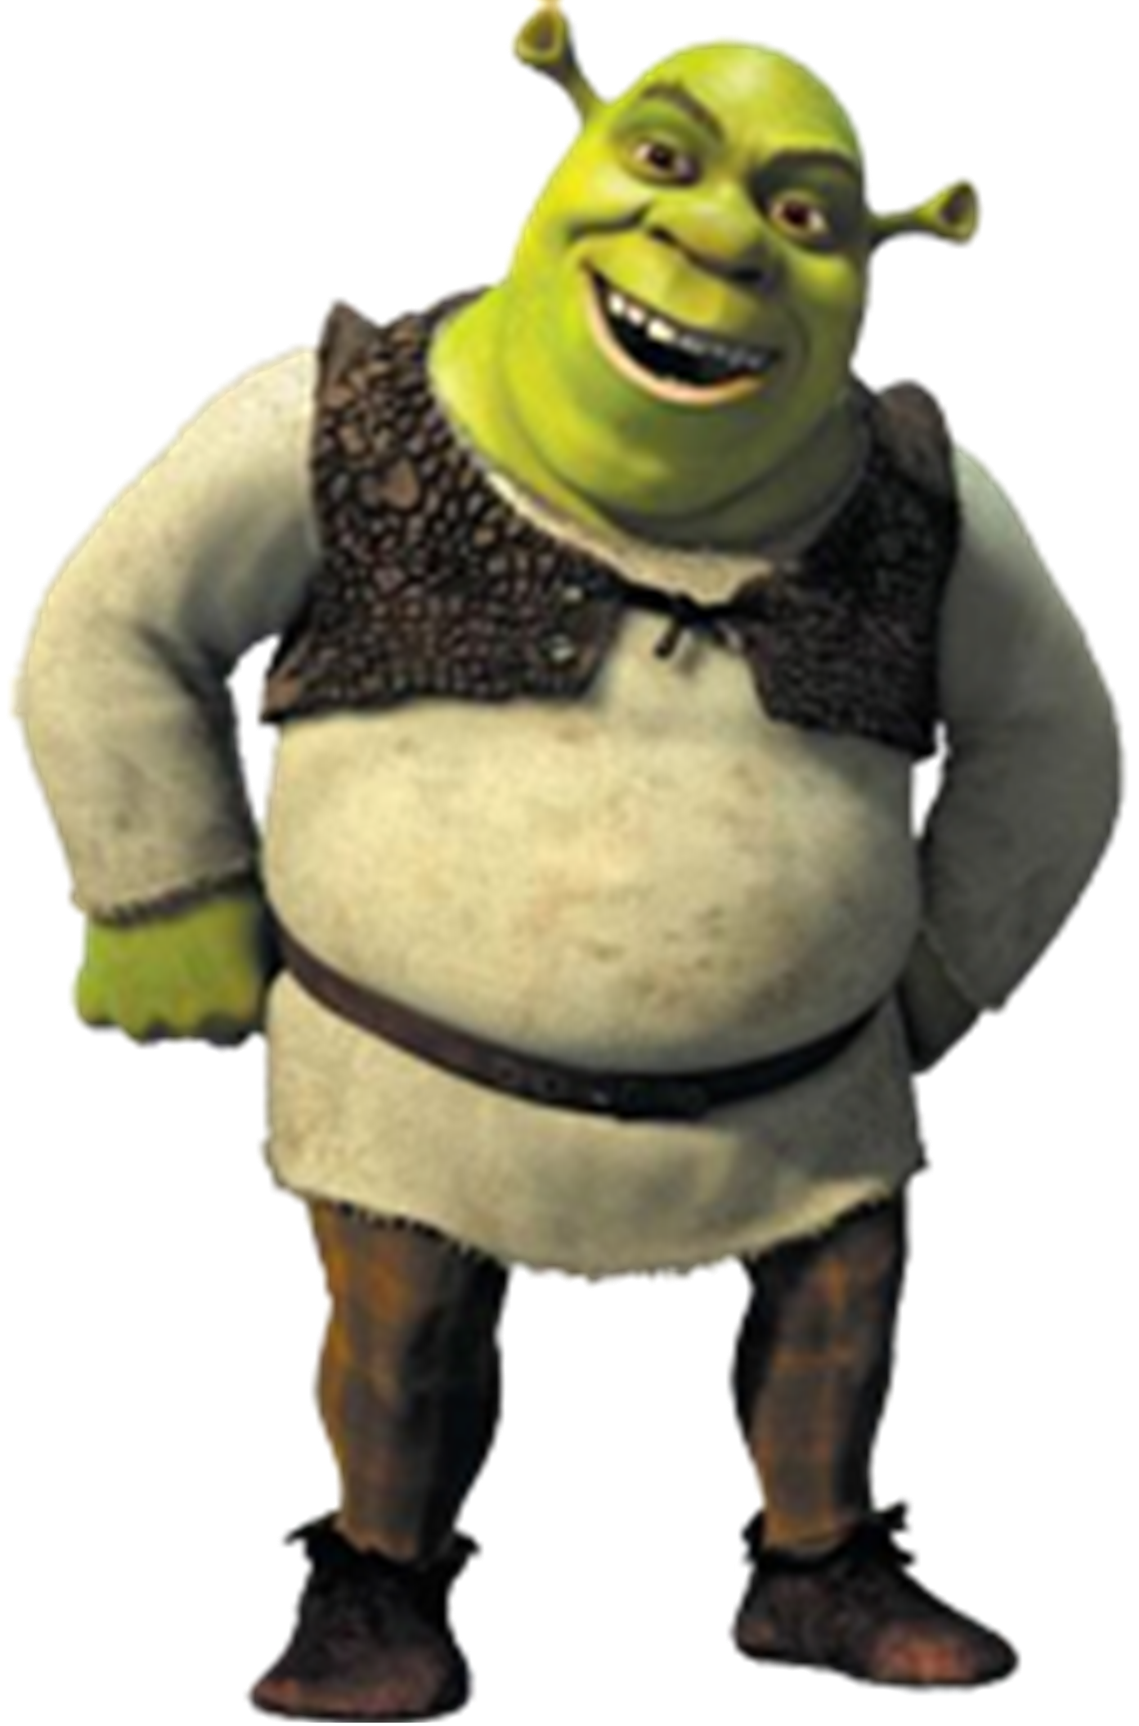 Shrek, Shrek png